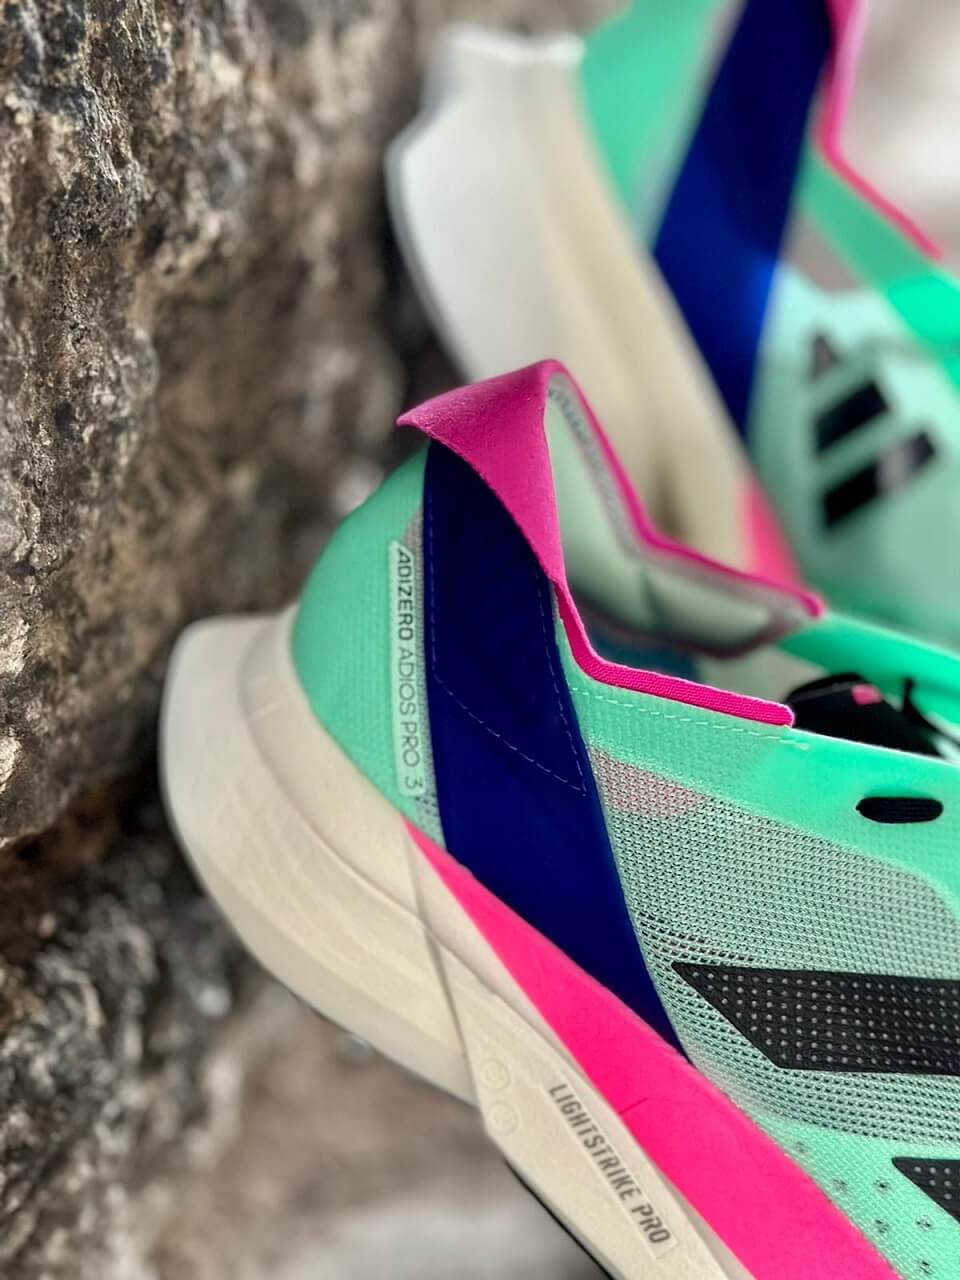 Close up of adidas Adizero Pro 3 running shoe in Pulse Mint colourway